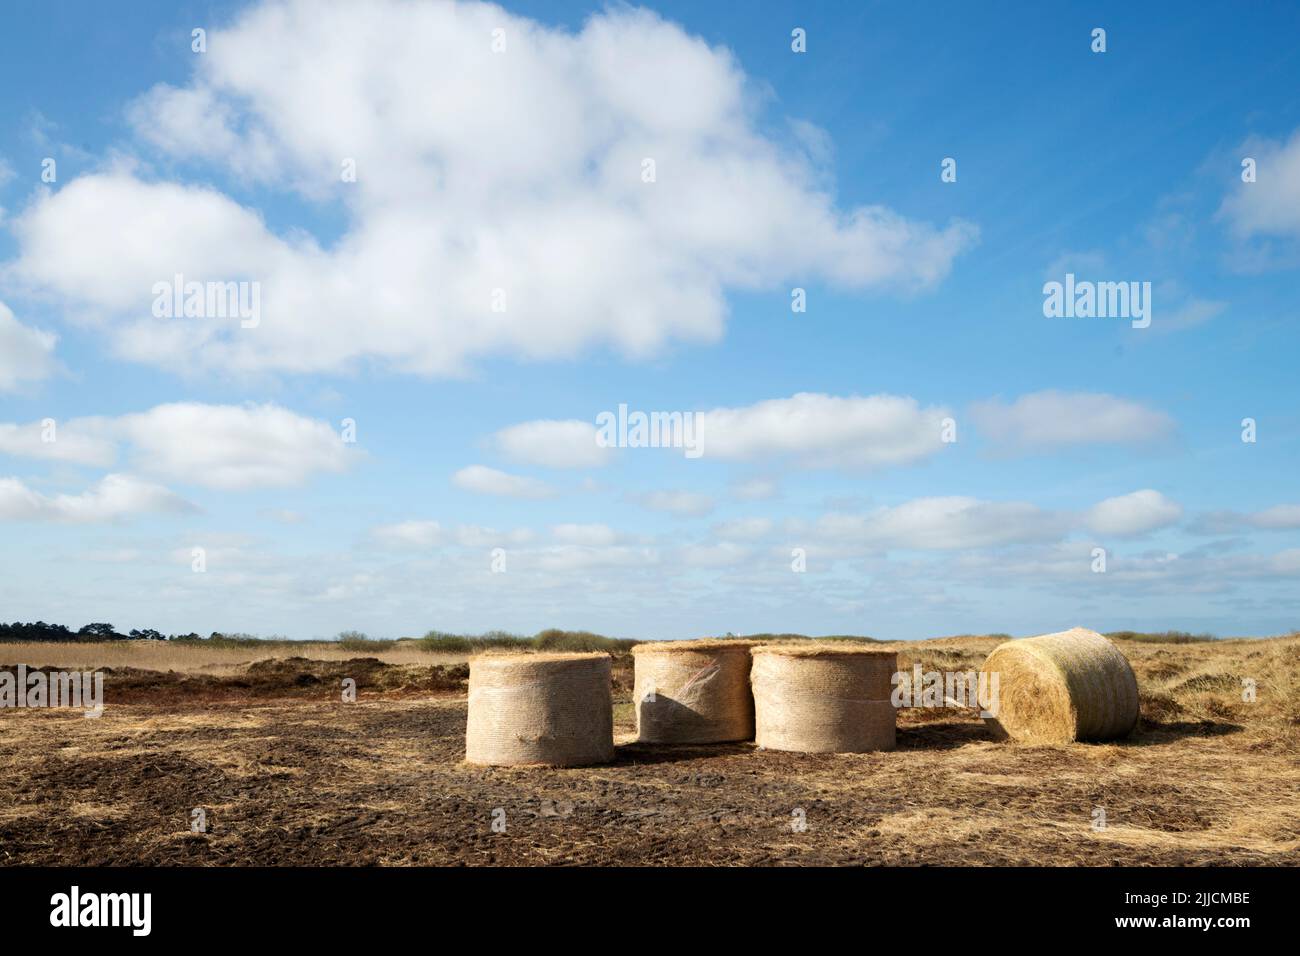 Straw rolls on a meadow Stock Photo